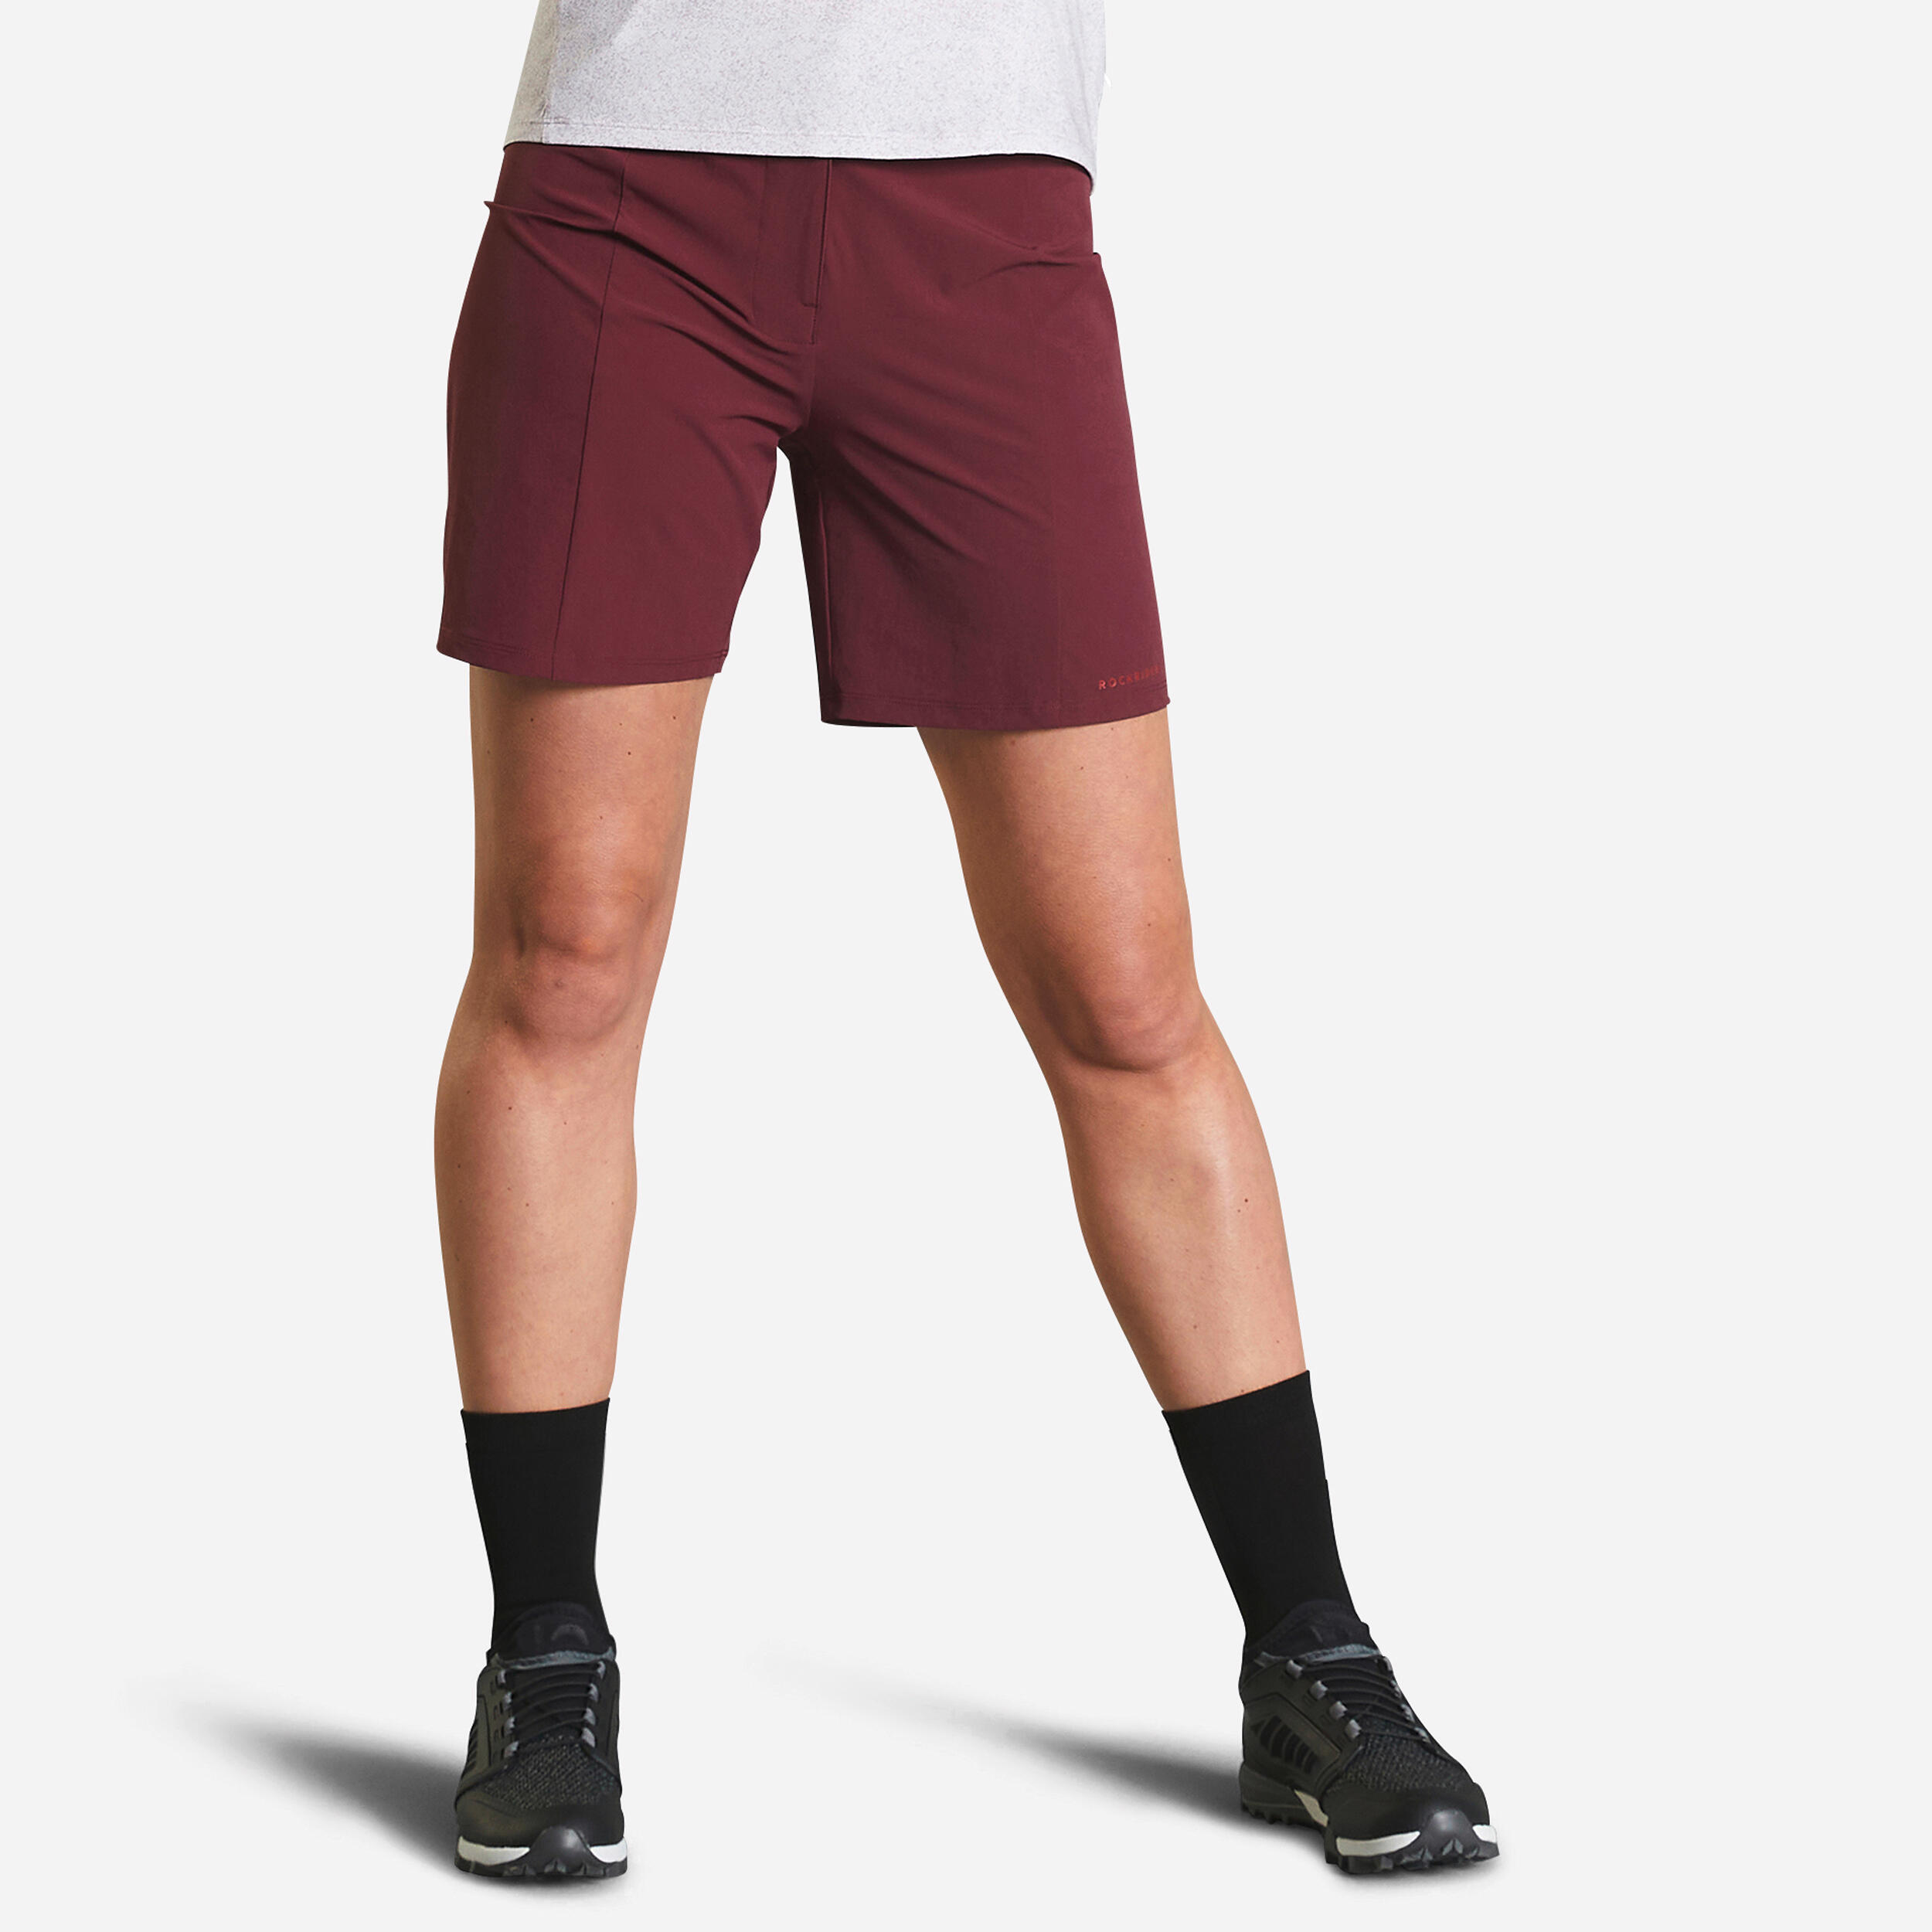 Women's Mountain Biking Shorts Expl 500 - Burgundy 1/12